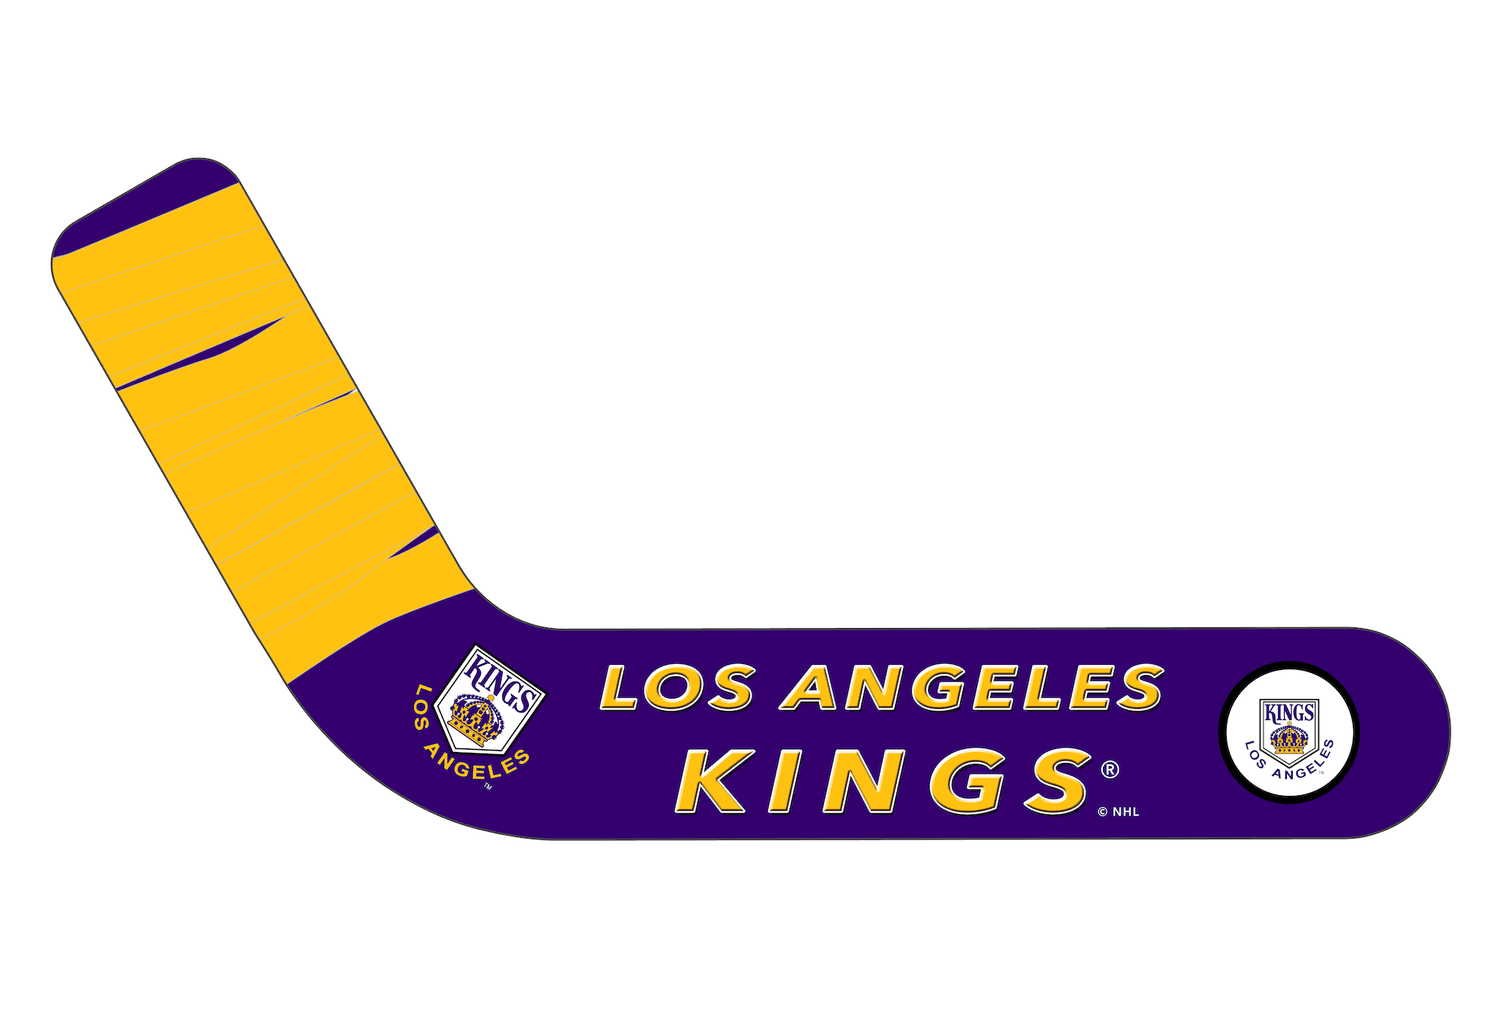 Los Angeles Kings 1967  La kings hockey, Kings hockey, La kings